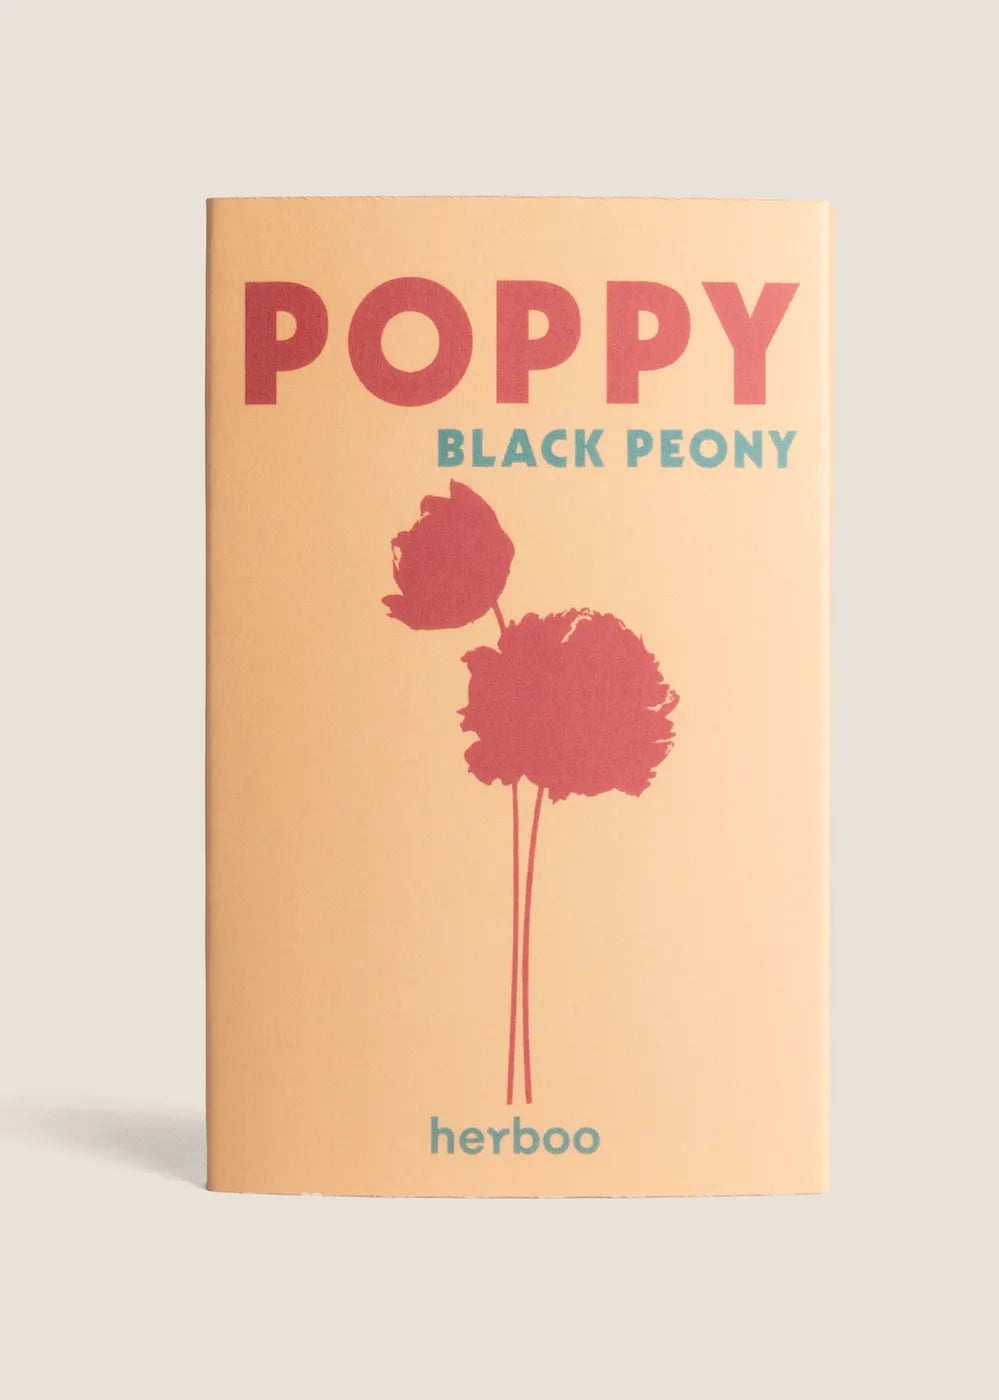 Poppy black peony seeds